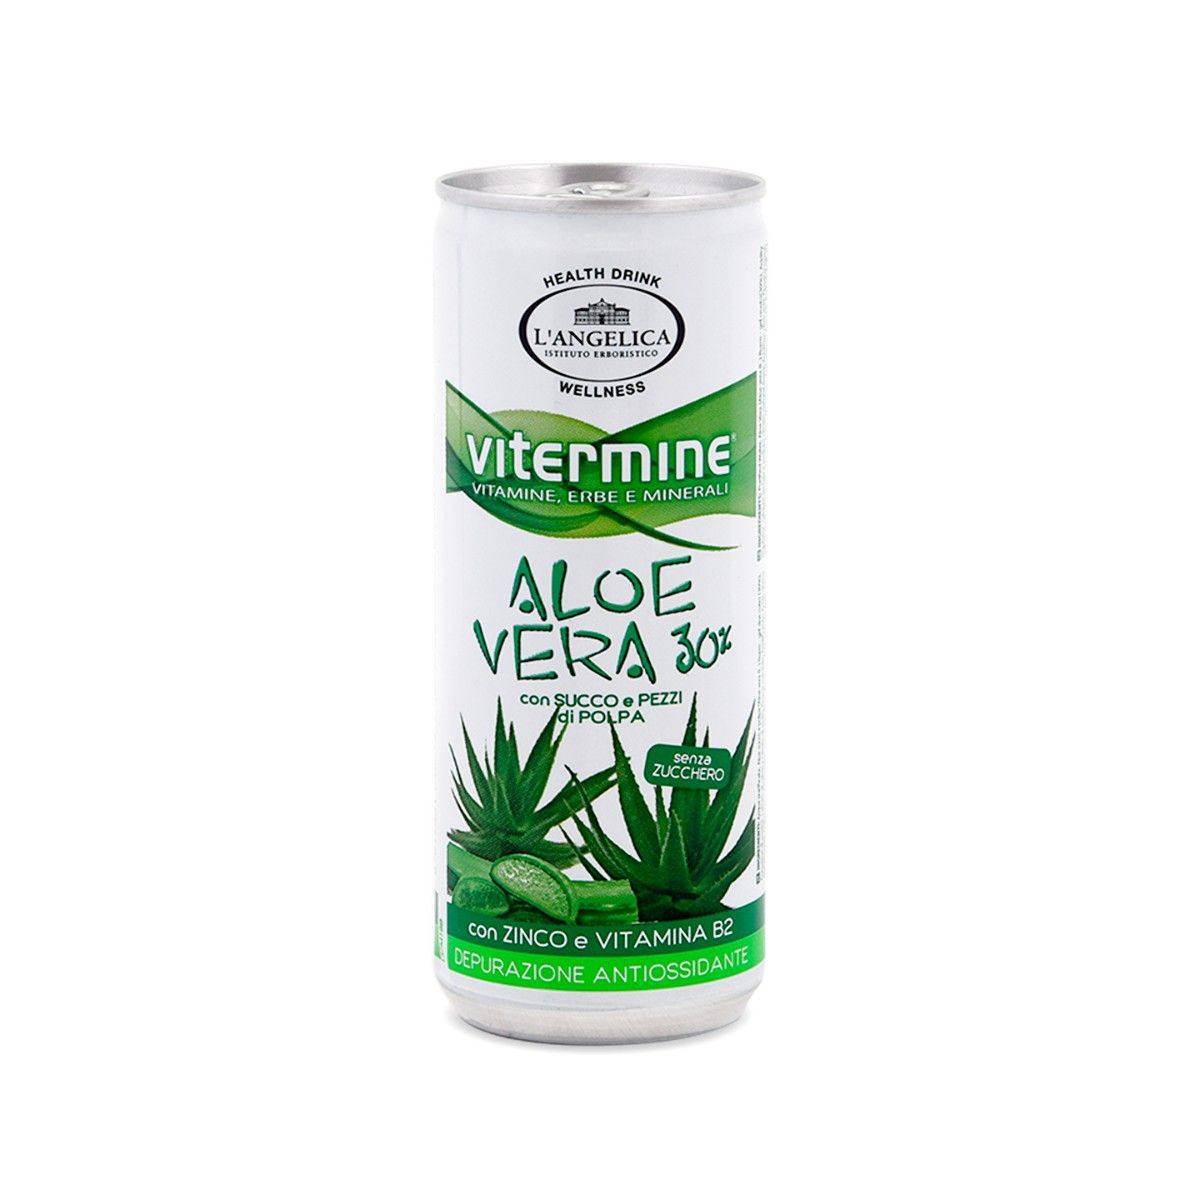 Aloe Vera Drink 30% - Original Flavour